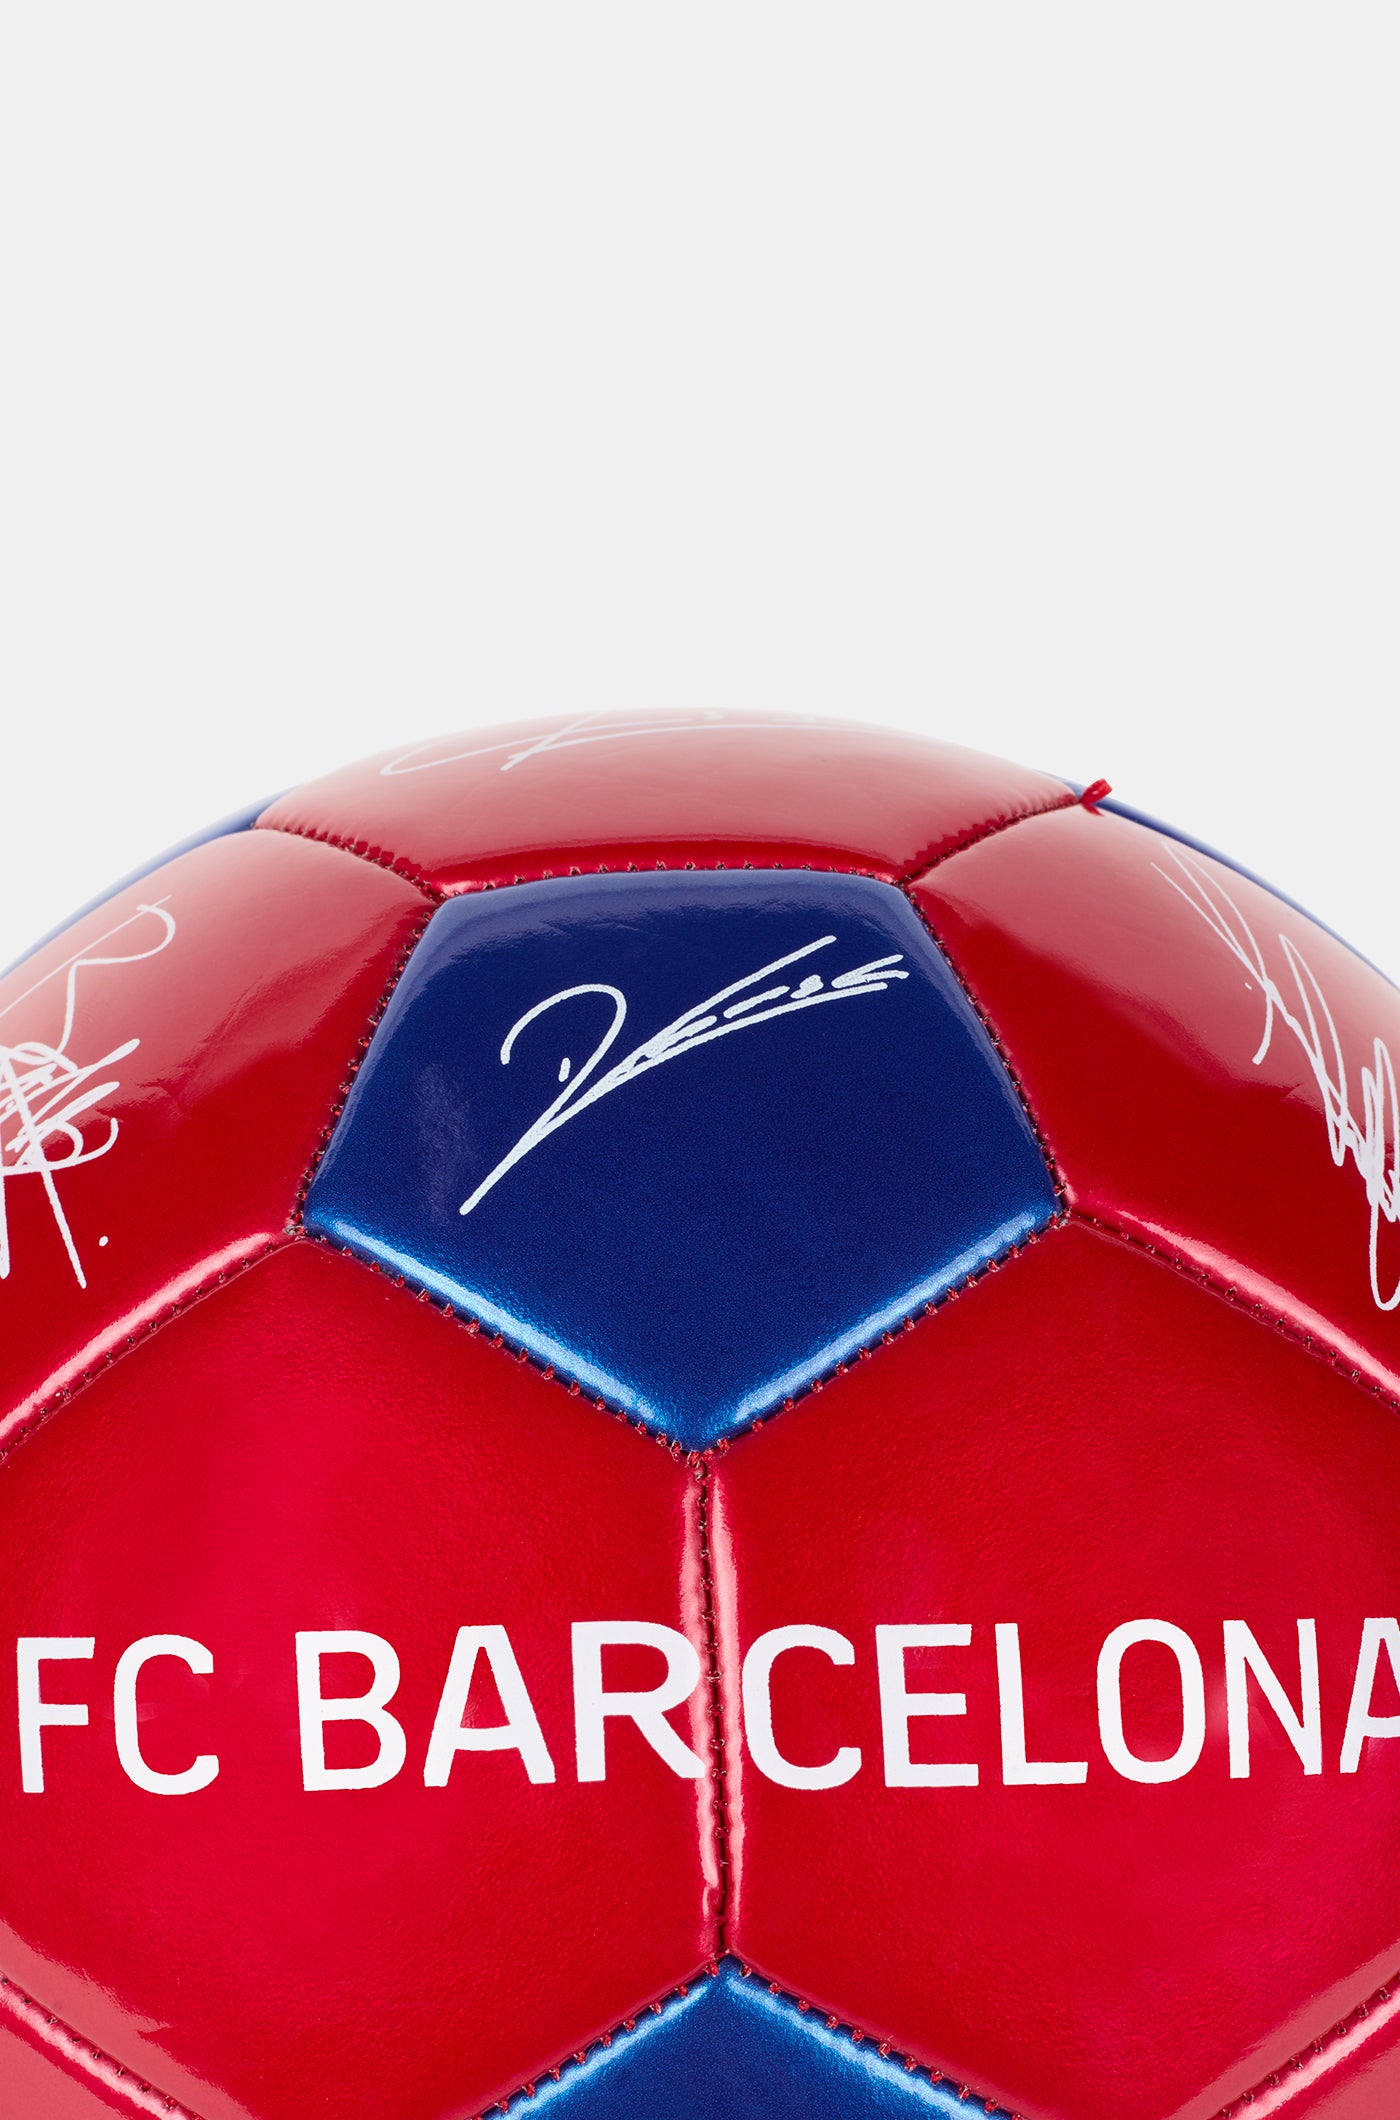 FC Barcelona Ball - Large